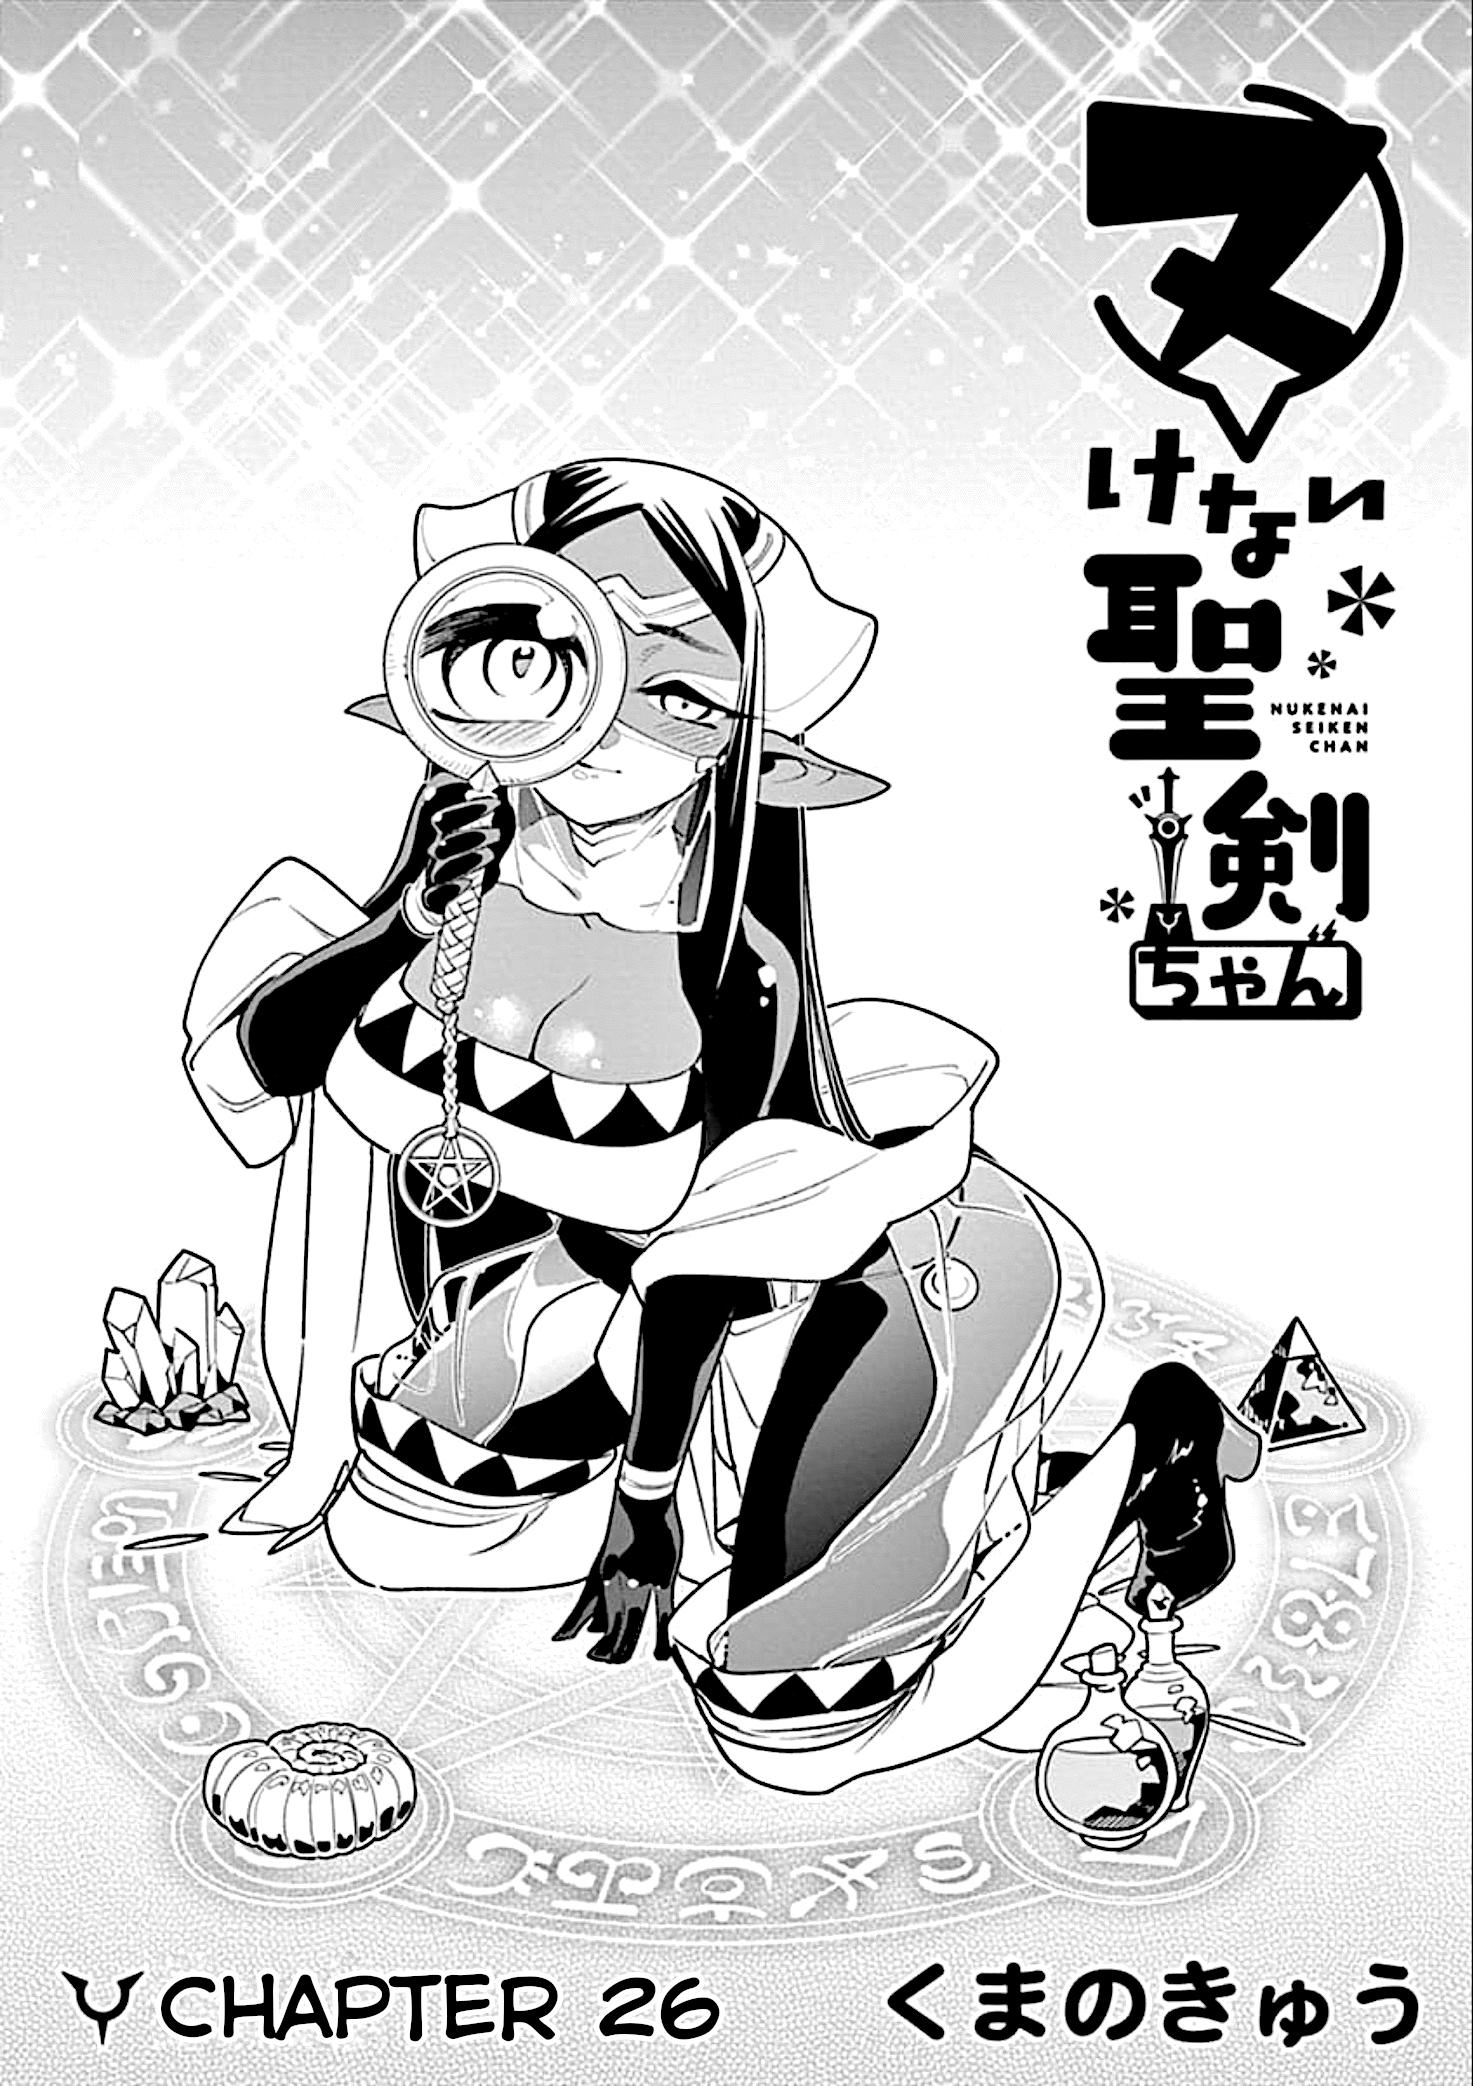 Read Nukenai Seiken Chan Chapter 26 On Mangakakalot